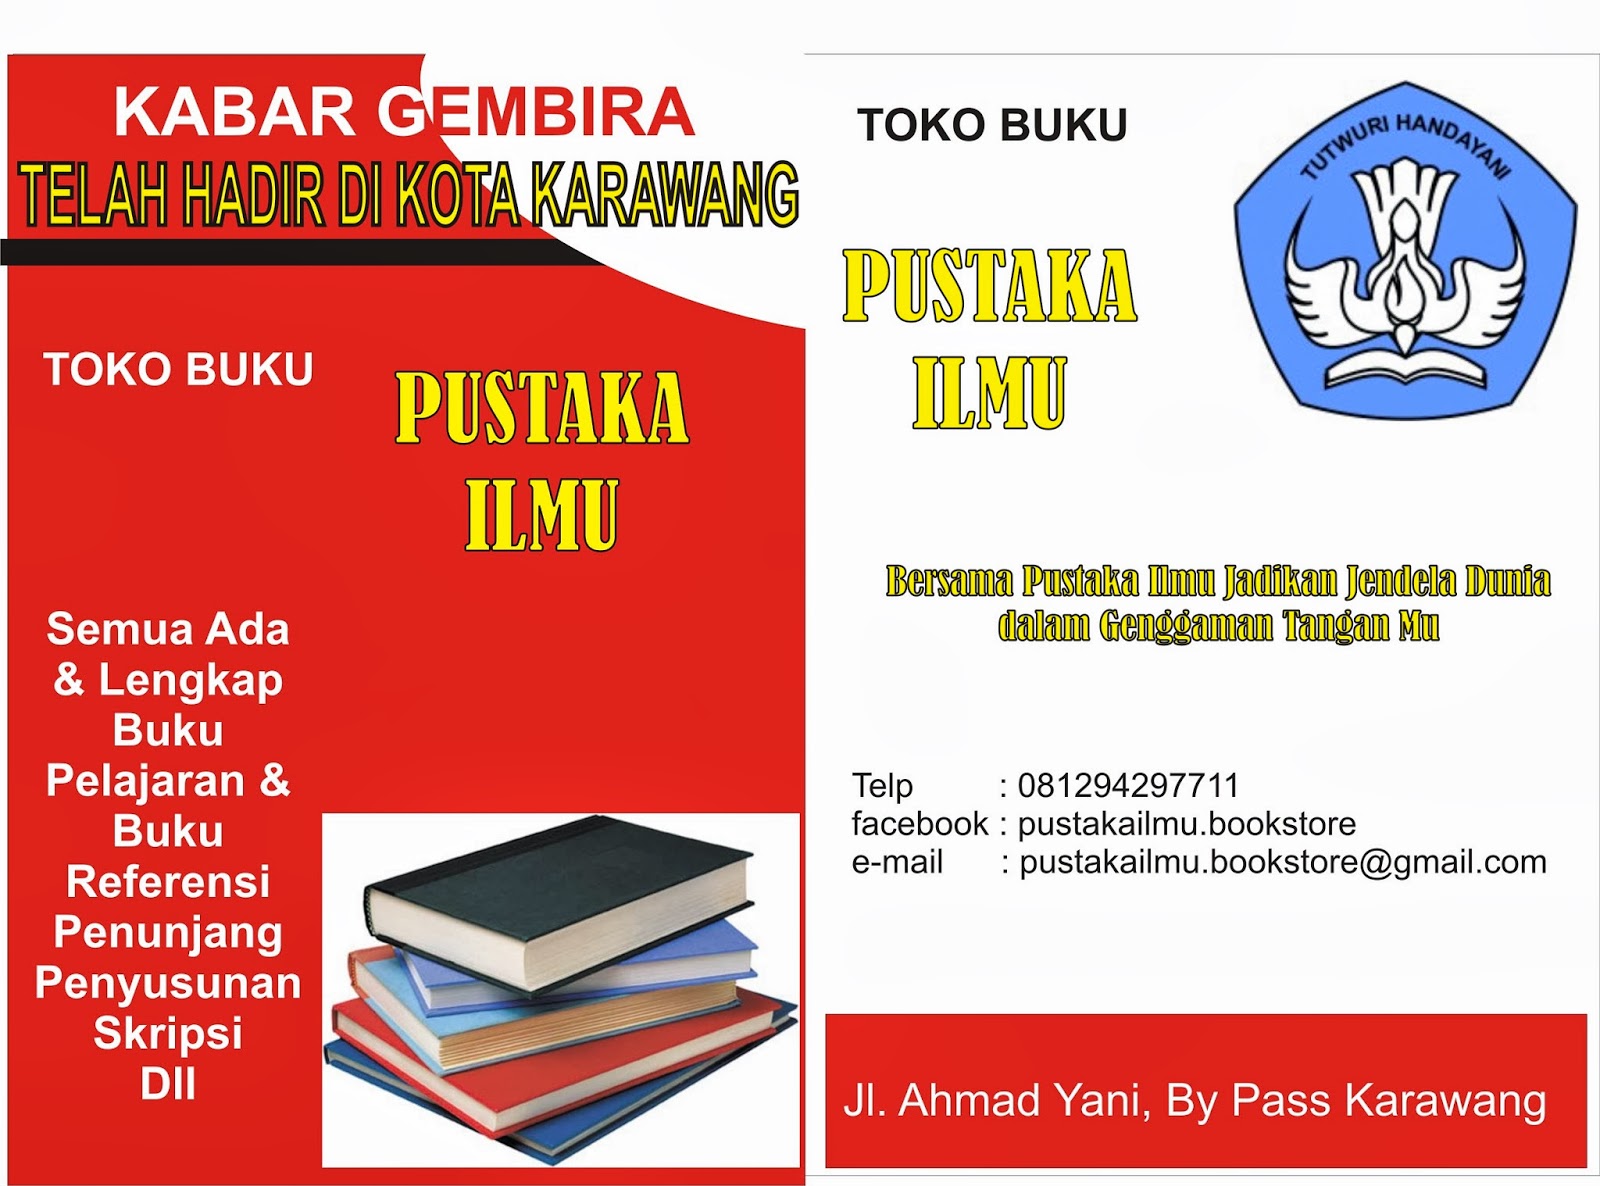 Amieh_shop collection: Contoh Brosur Toko Buku "Pustaka Ilmu"